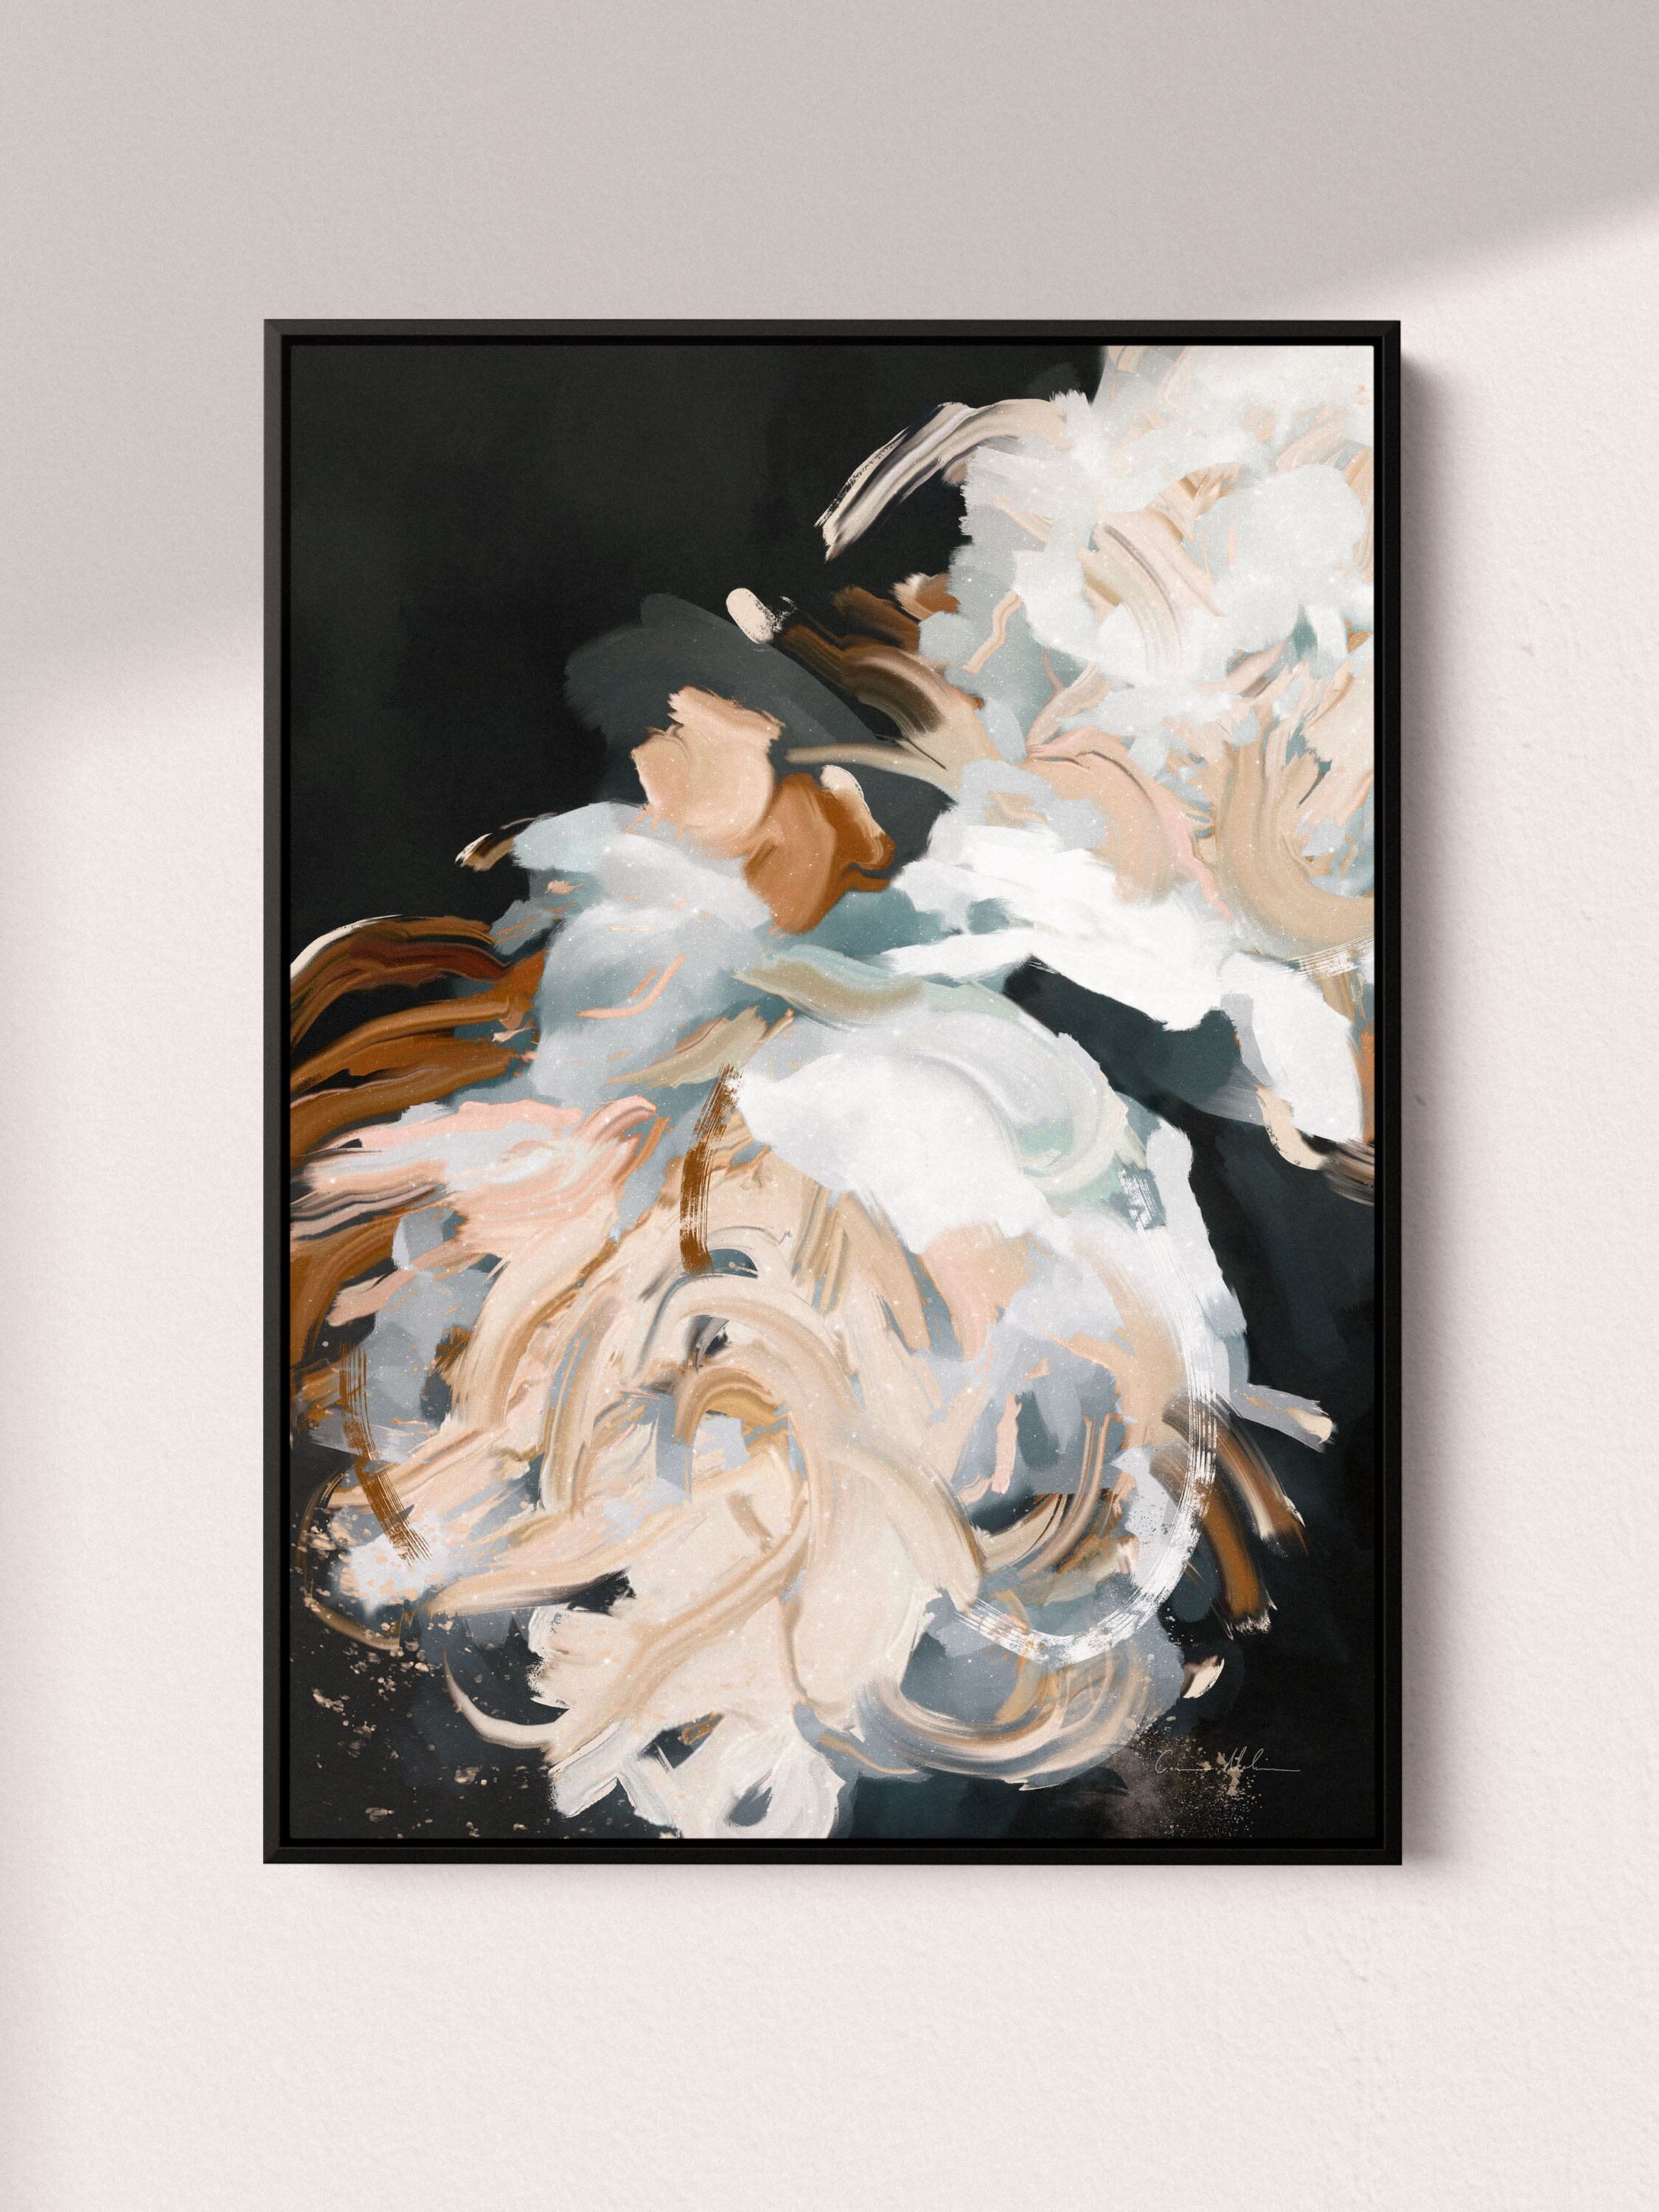 "Provence" on Canvas - Portrait Canvas Wall Art Corinne Melanie Art Professionally Framed - Black 24x32in / 60x80cm 